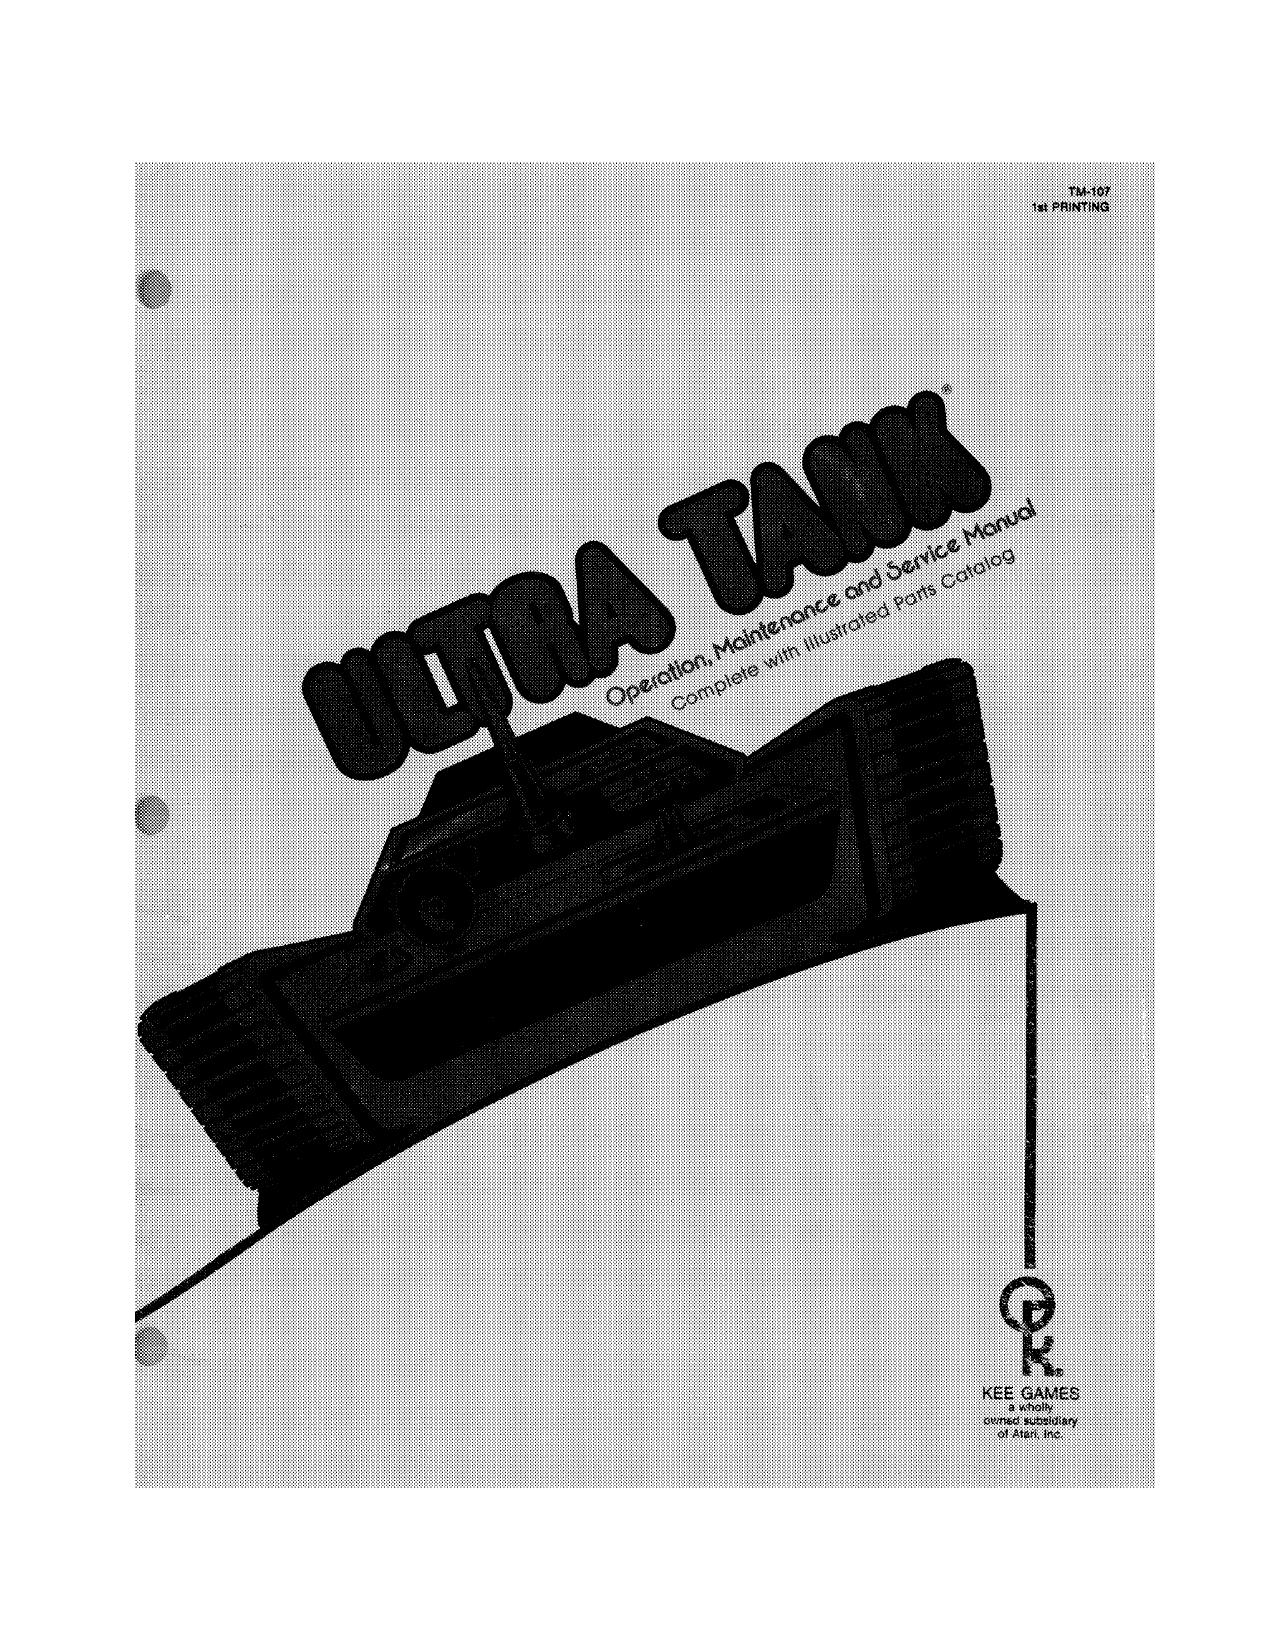 Ultra Tank TM-107 1st Printing